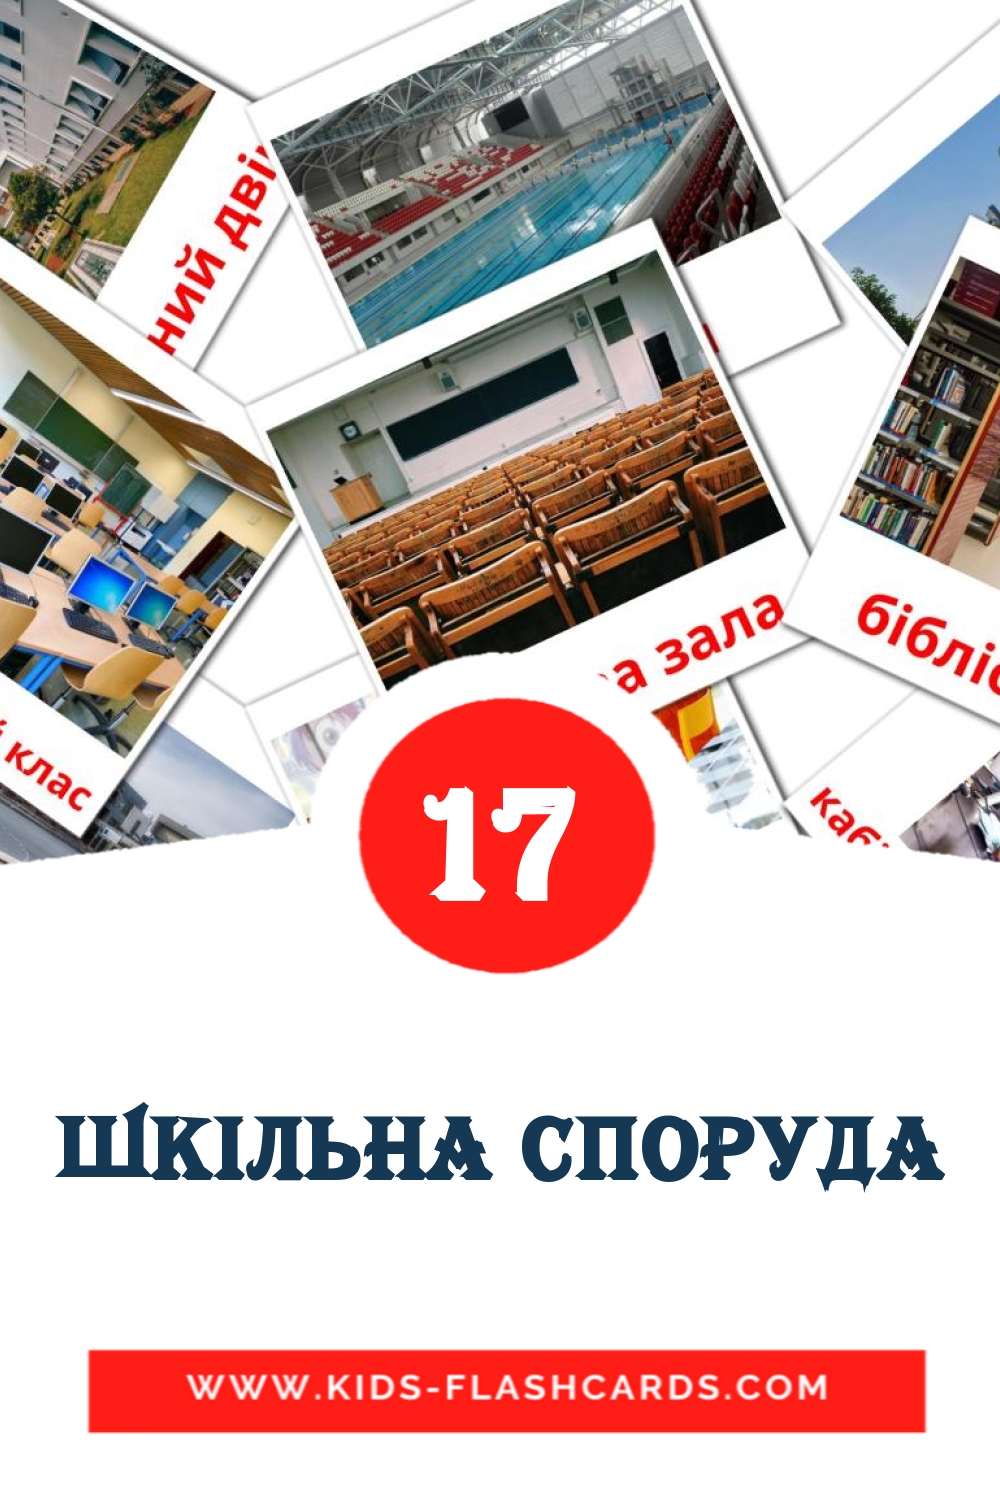 17 Шкiльна споруда Picture Cards for Kindergarden in ukrainian